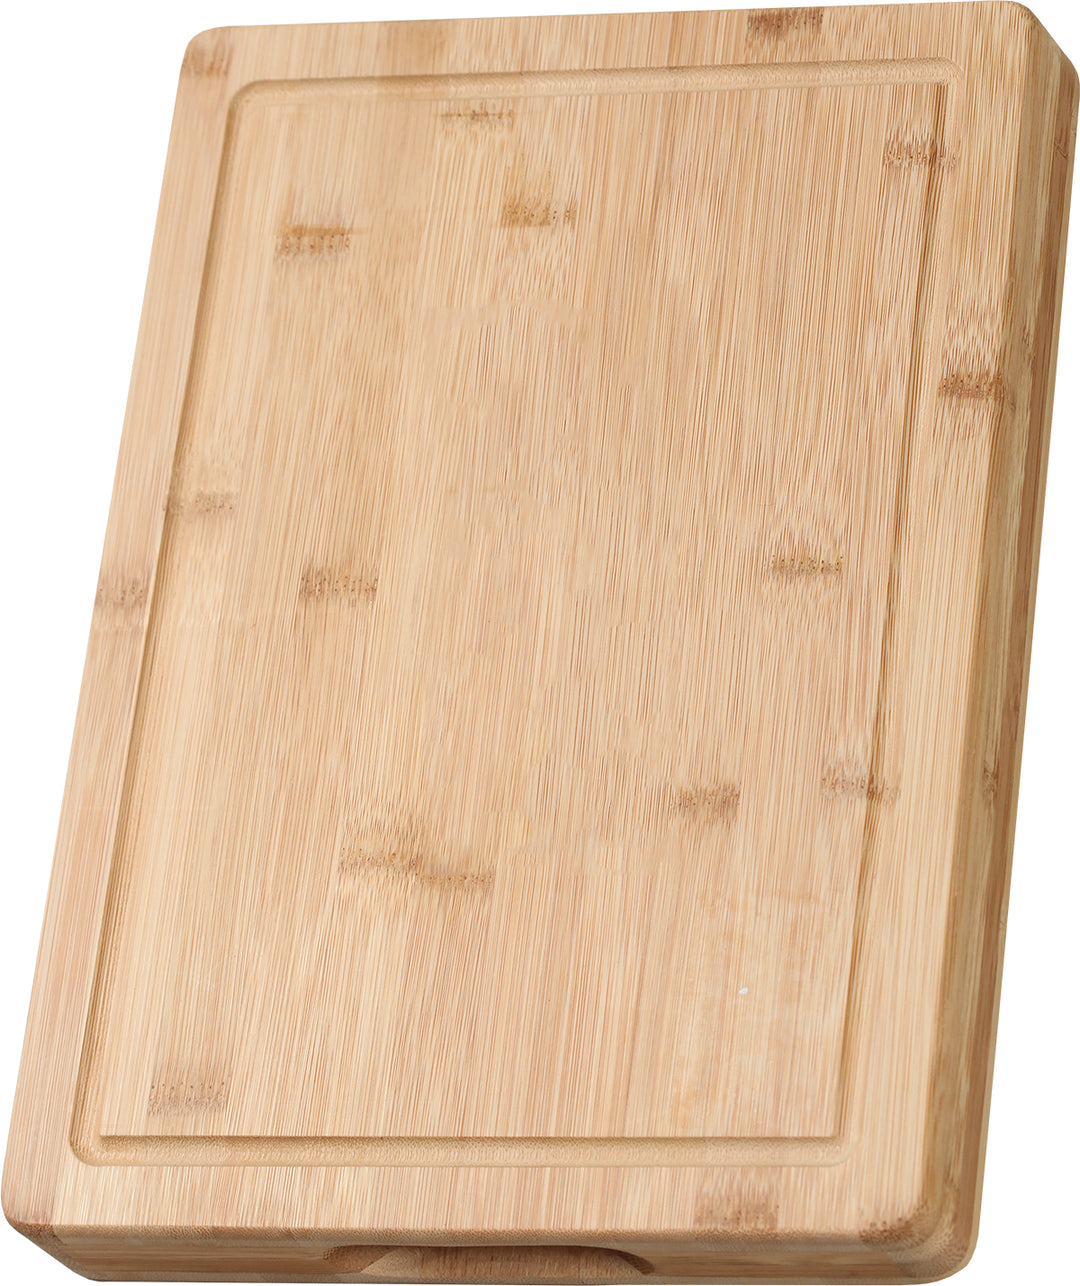 Personalized Bamboo Block Cutting Board